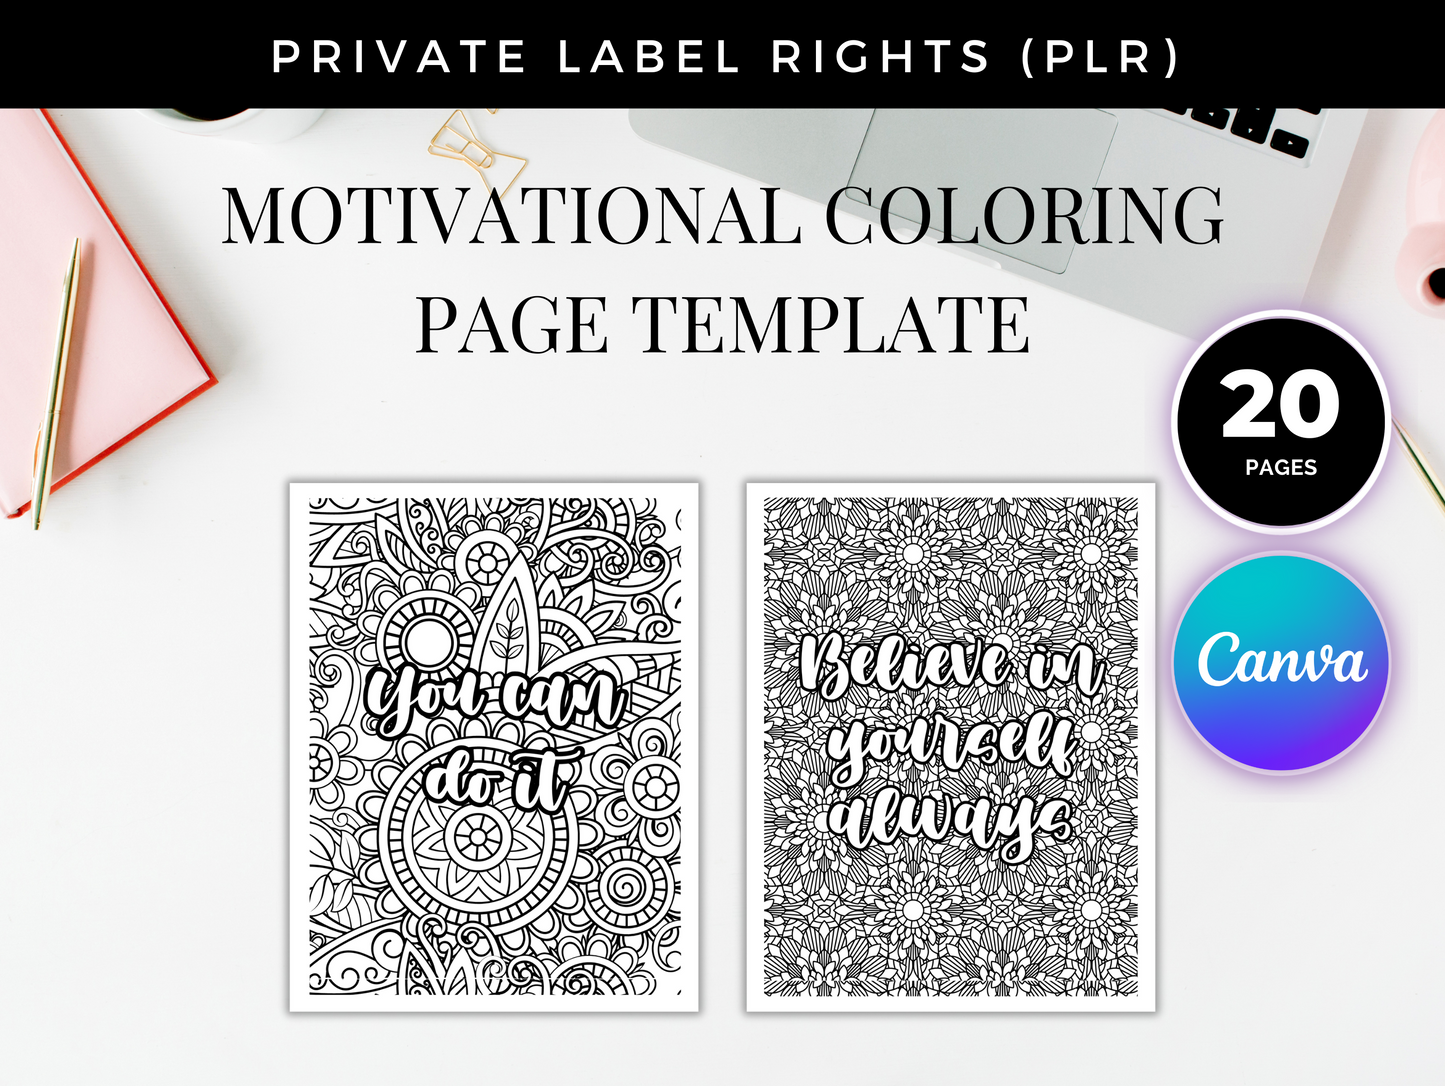 PLR 20 Motivational Coloring Pages Template